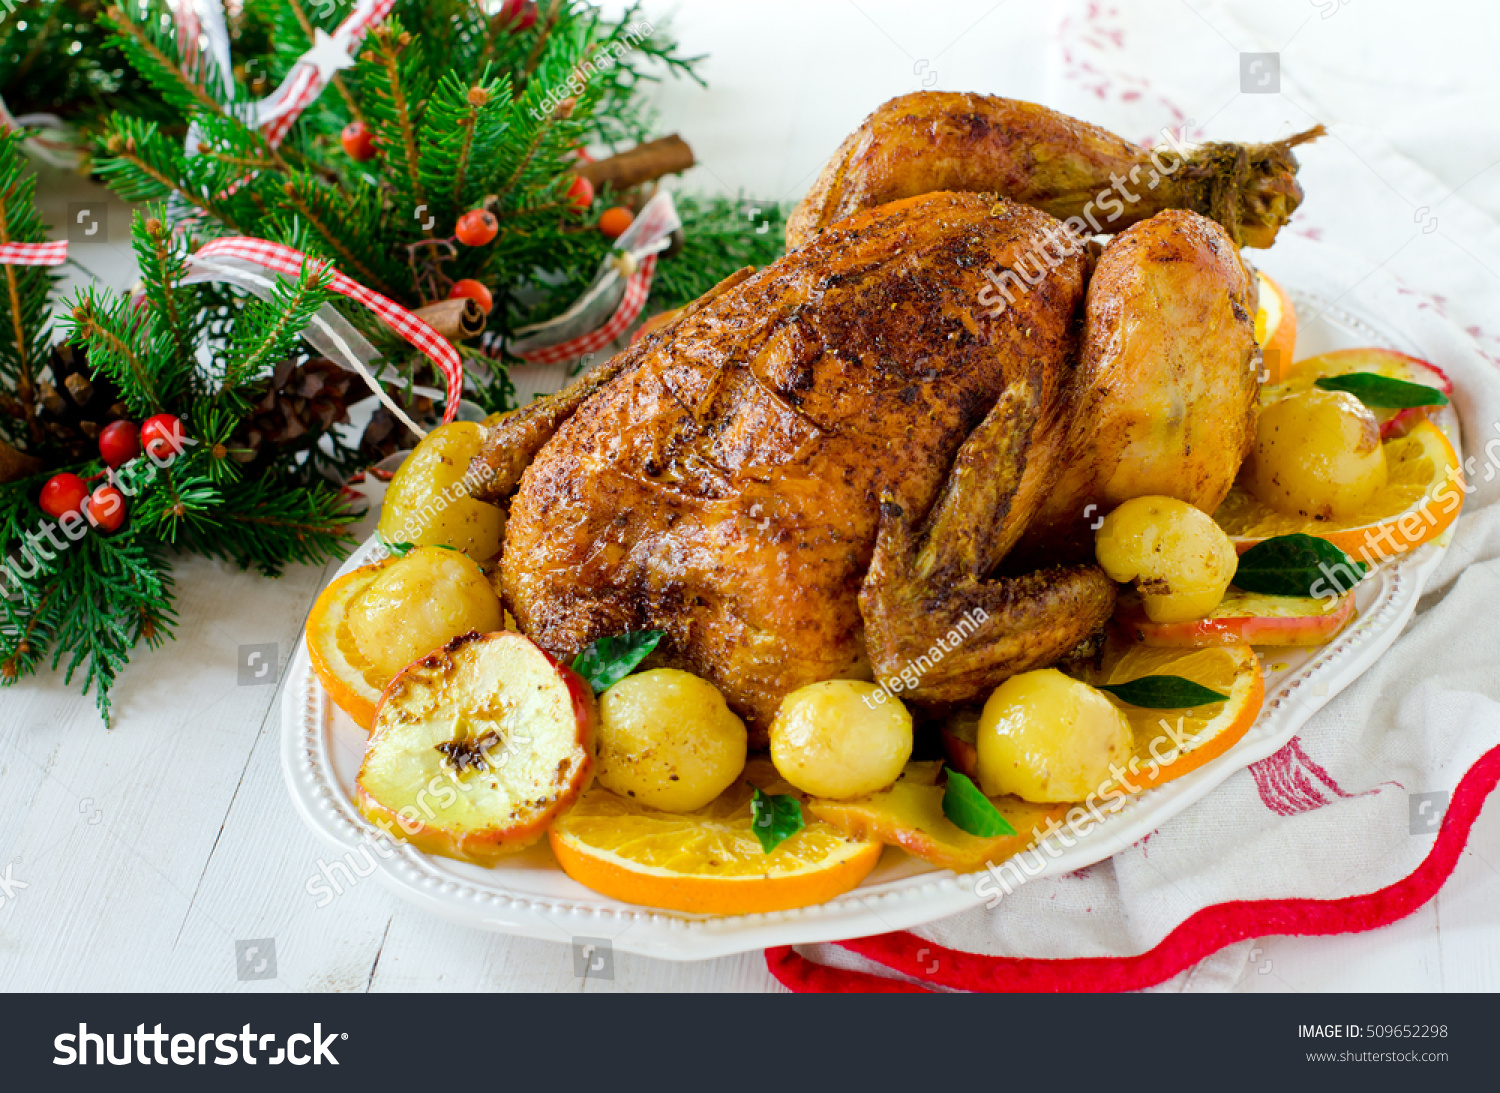 курица на праздничный стол фото